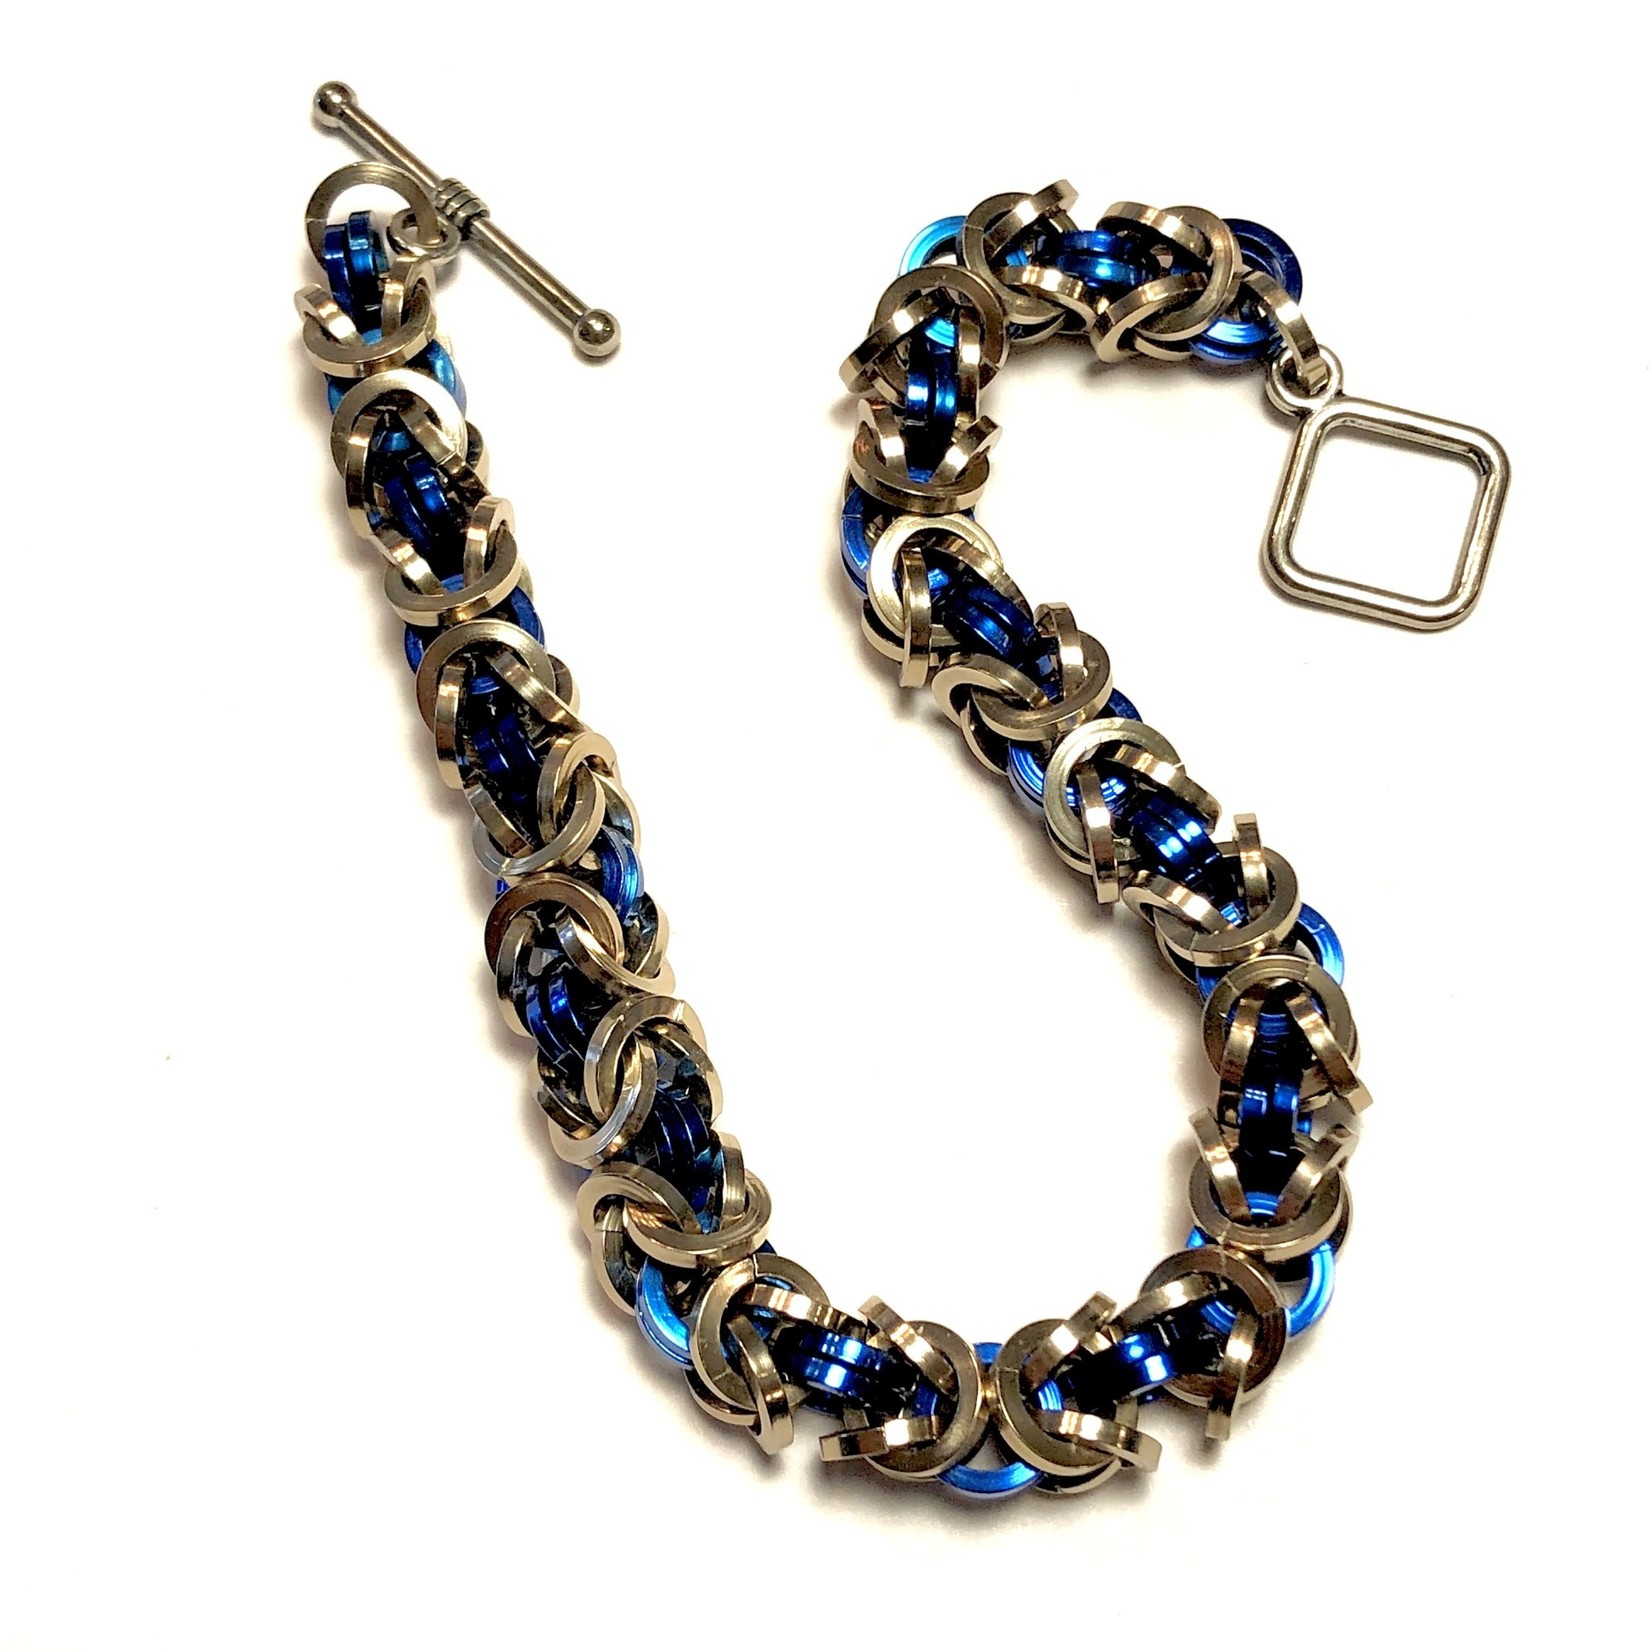 Hyperlinks Chain Maille Sq Byzantine Bracelet Kit Royal Blue & Champagne